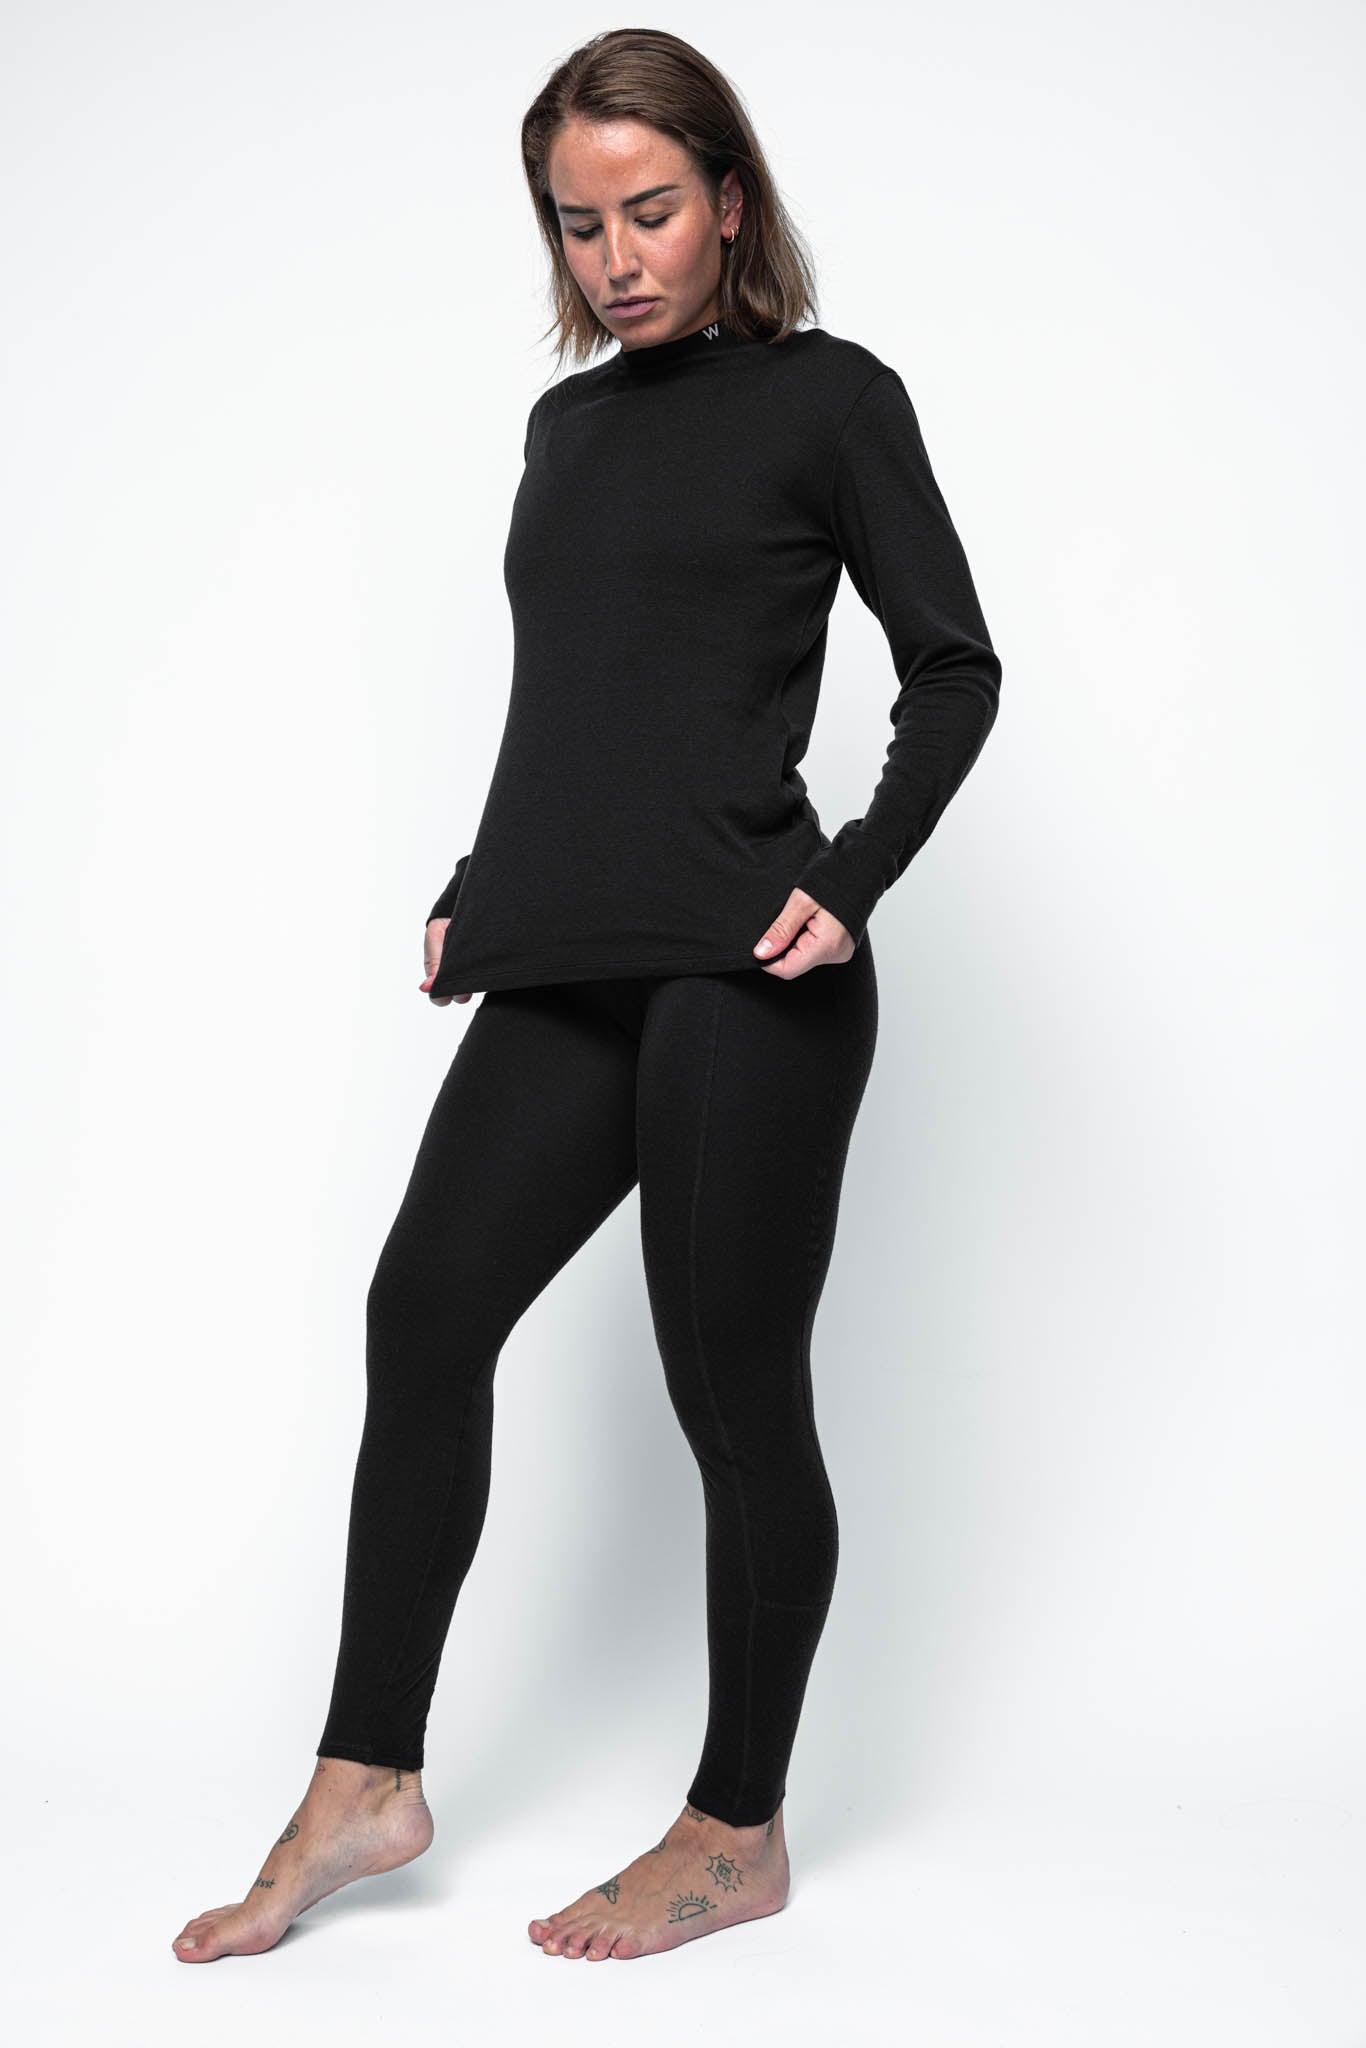 REIFF Women's Thermal Base Layer Leggings Long Jones Underwear, 100% Merino  Wool 